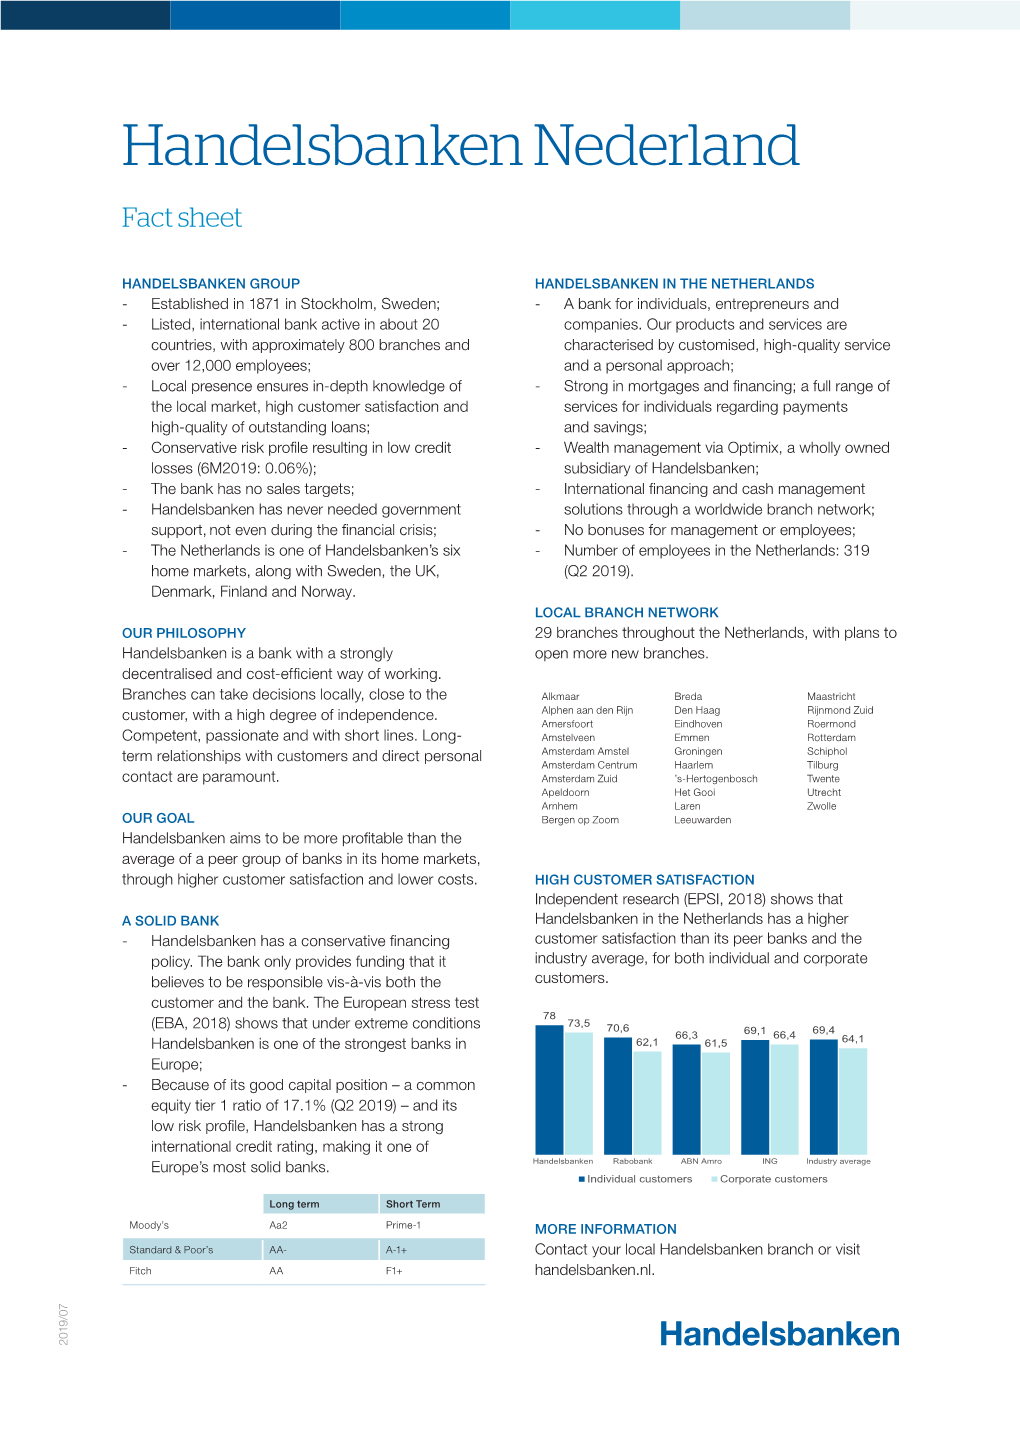 Handelsbanken Nederland Fact Sheet